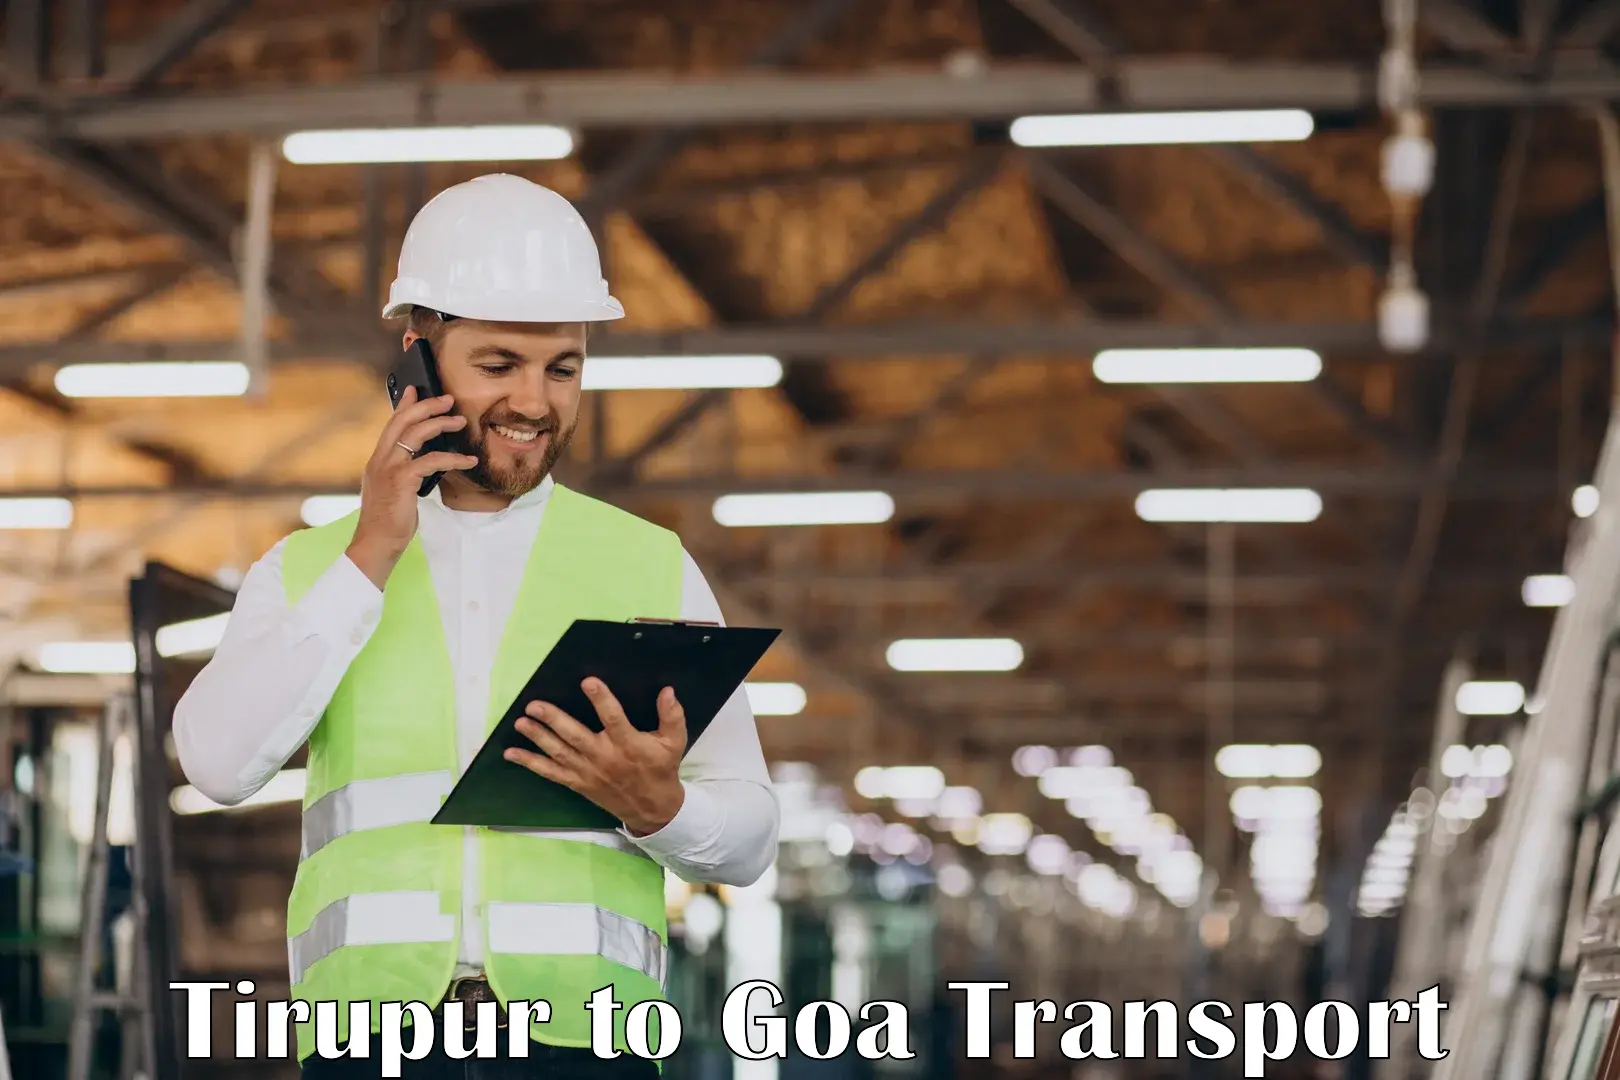 Delivery service Tirupur to Goa